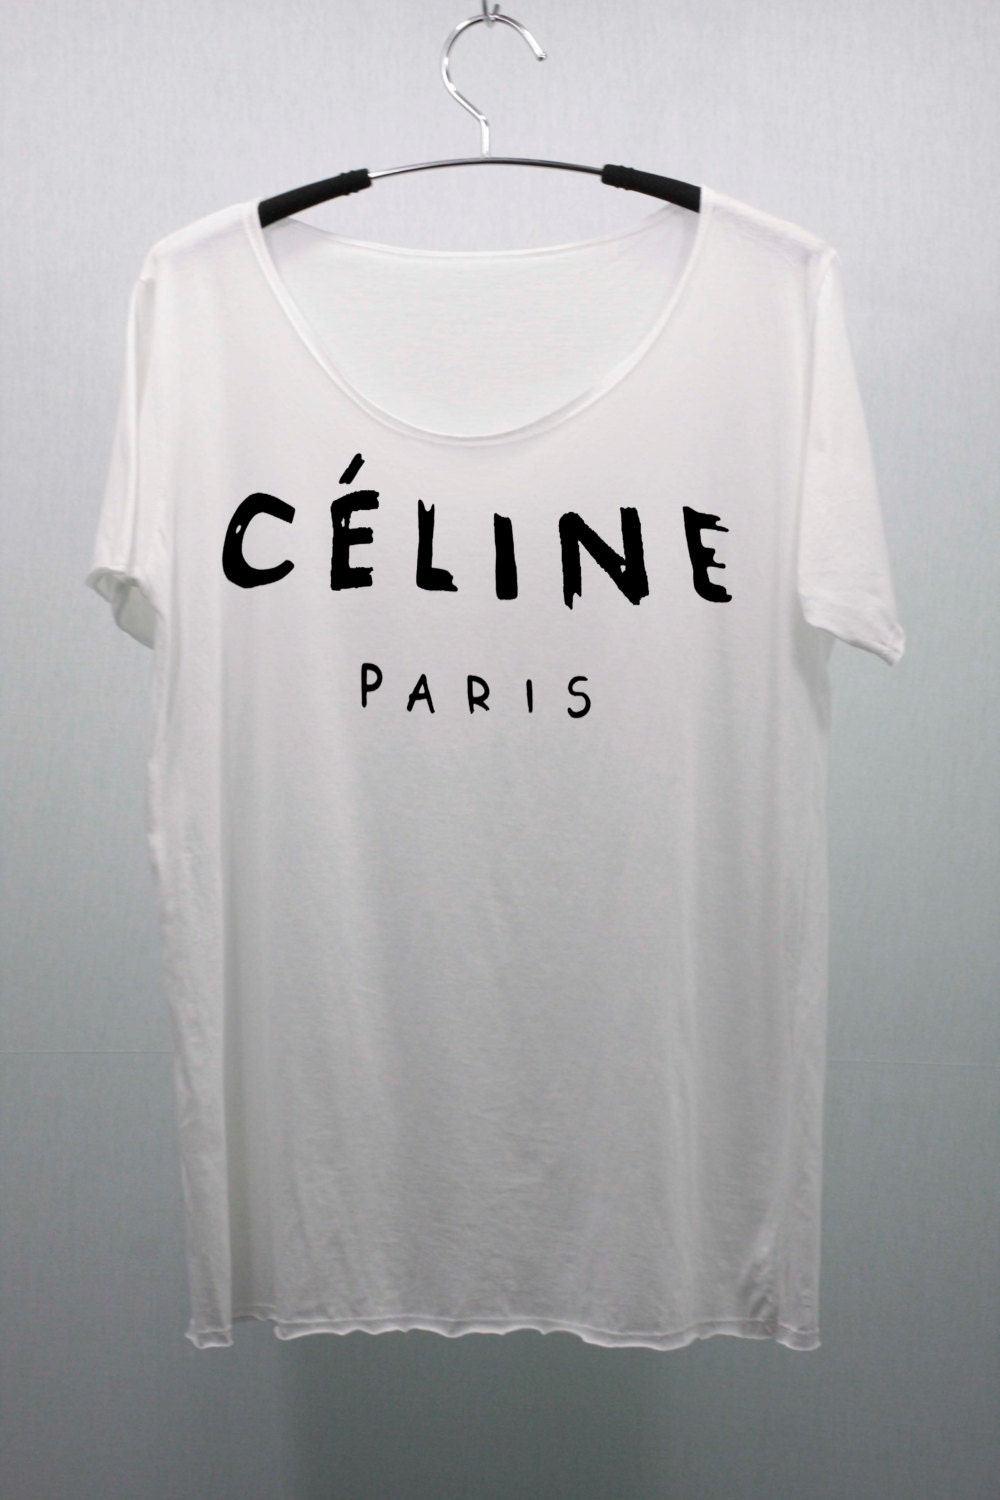 CELINE Paris T Shirts women handmade drawing and silk screen